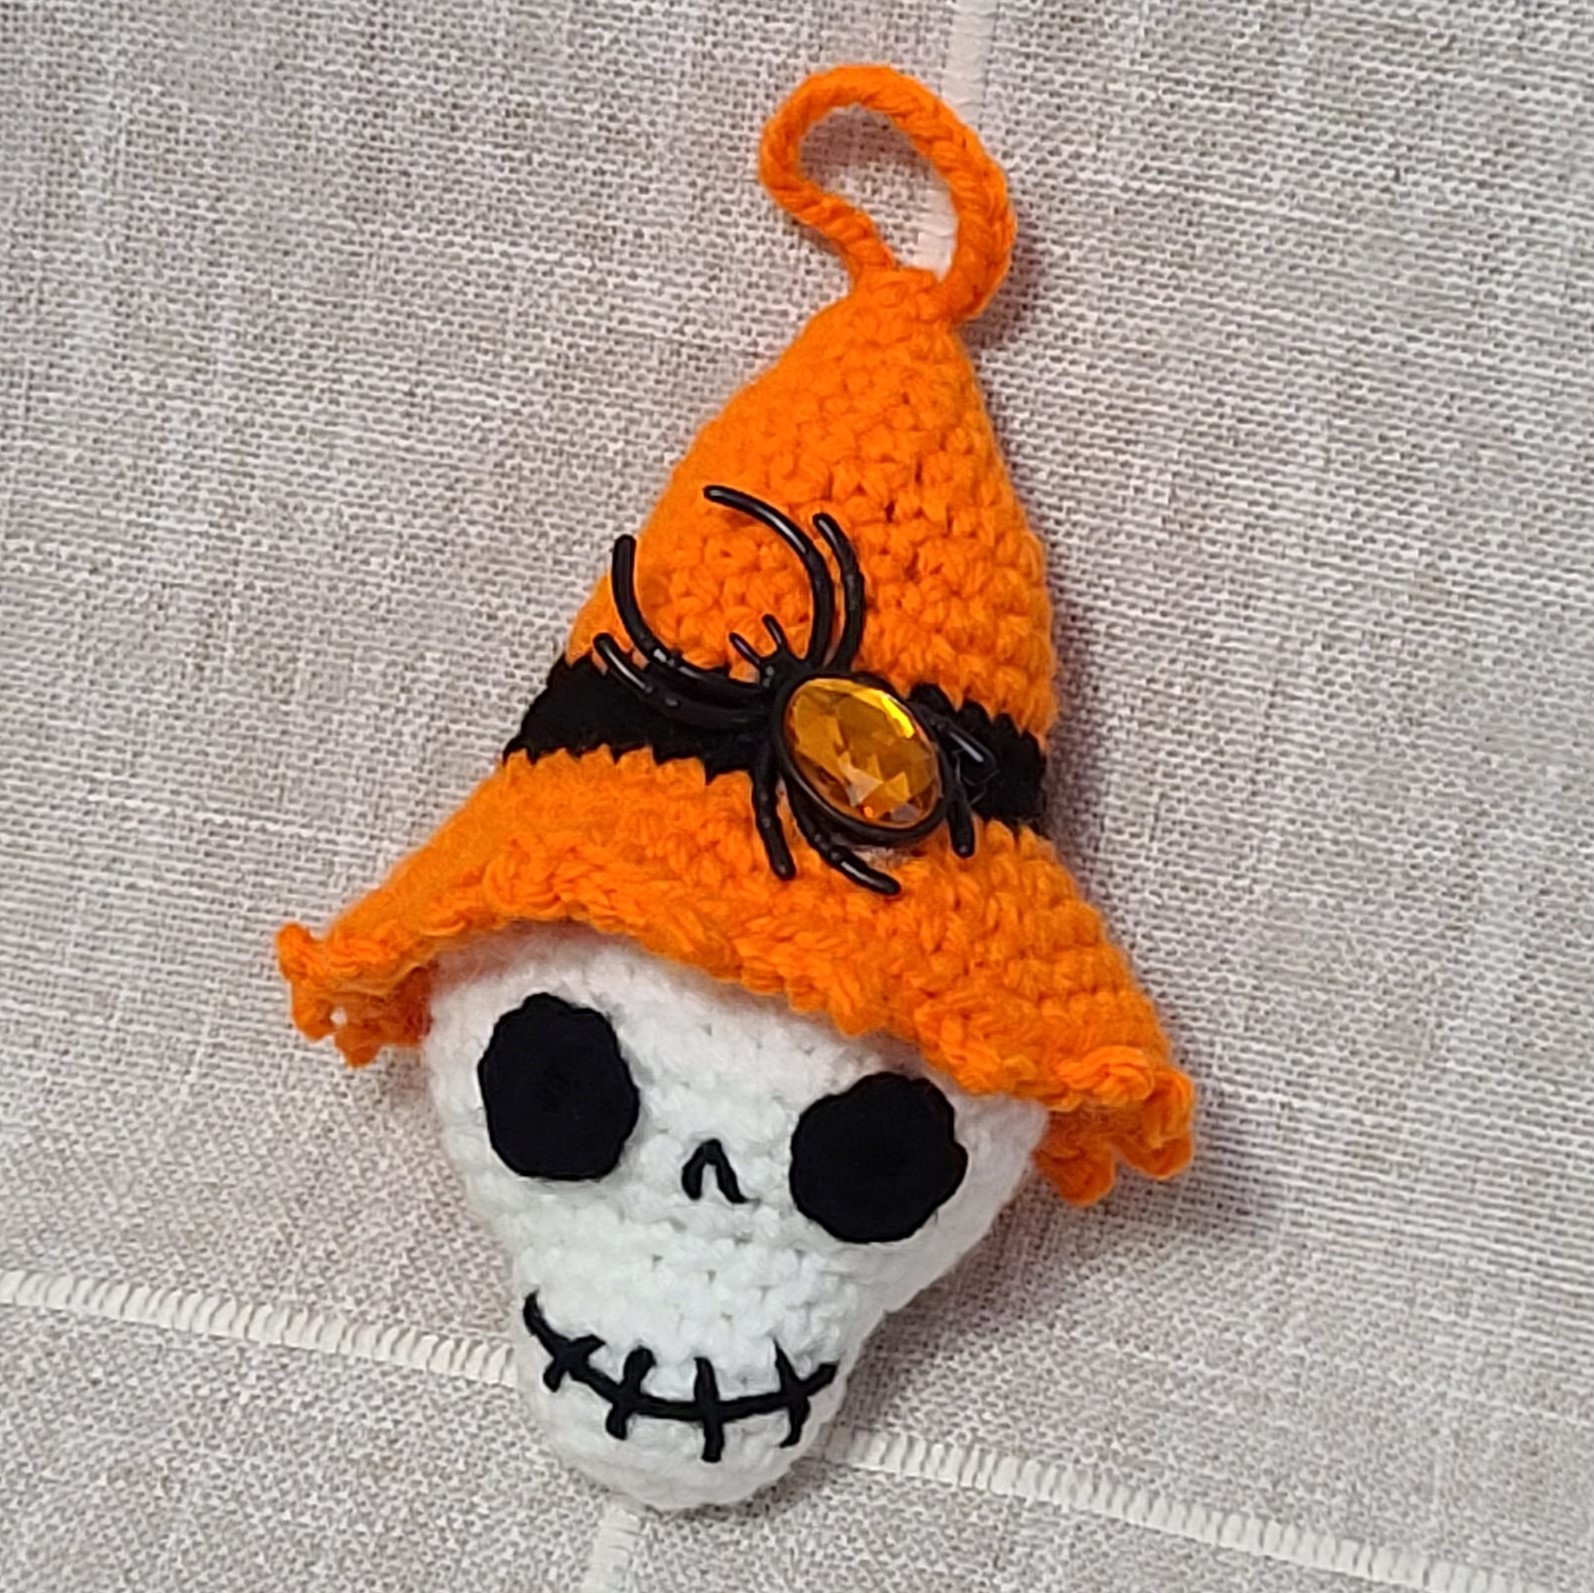 Crochet amigurumi halloween skull ornament